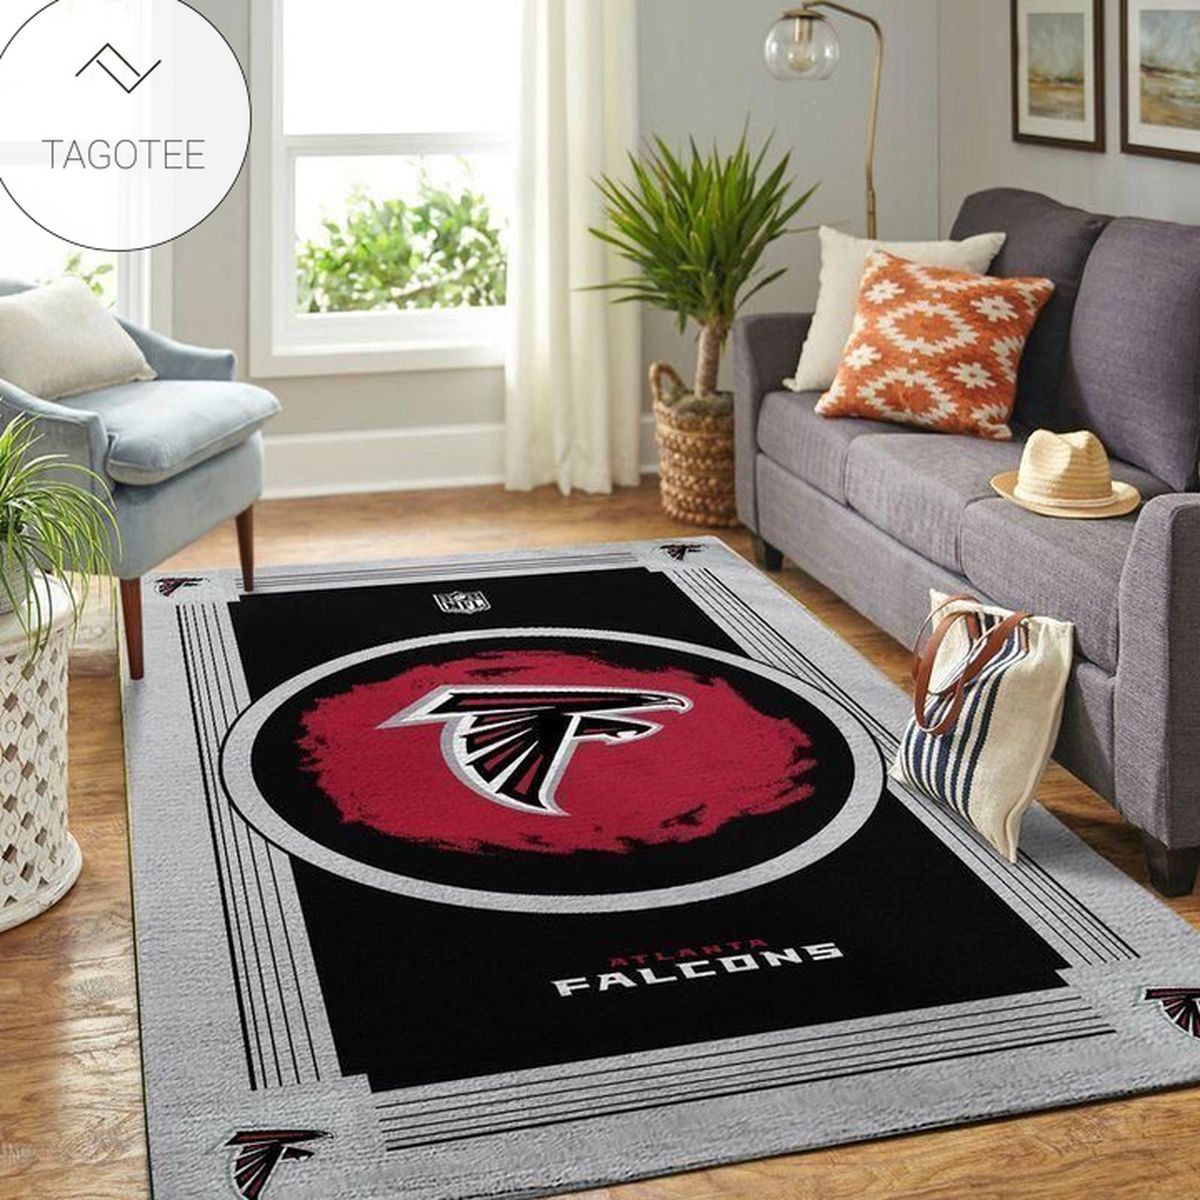 3D Atlanta Falcons Area Rug NFL Football Team Logo Carpet Living Room Rugs Floor Decor 2003031